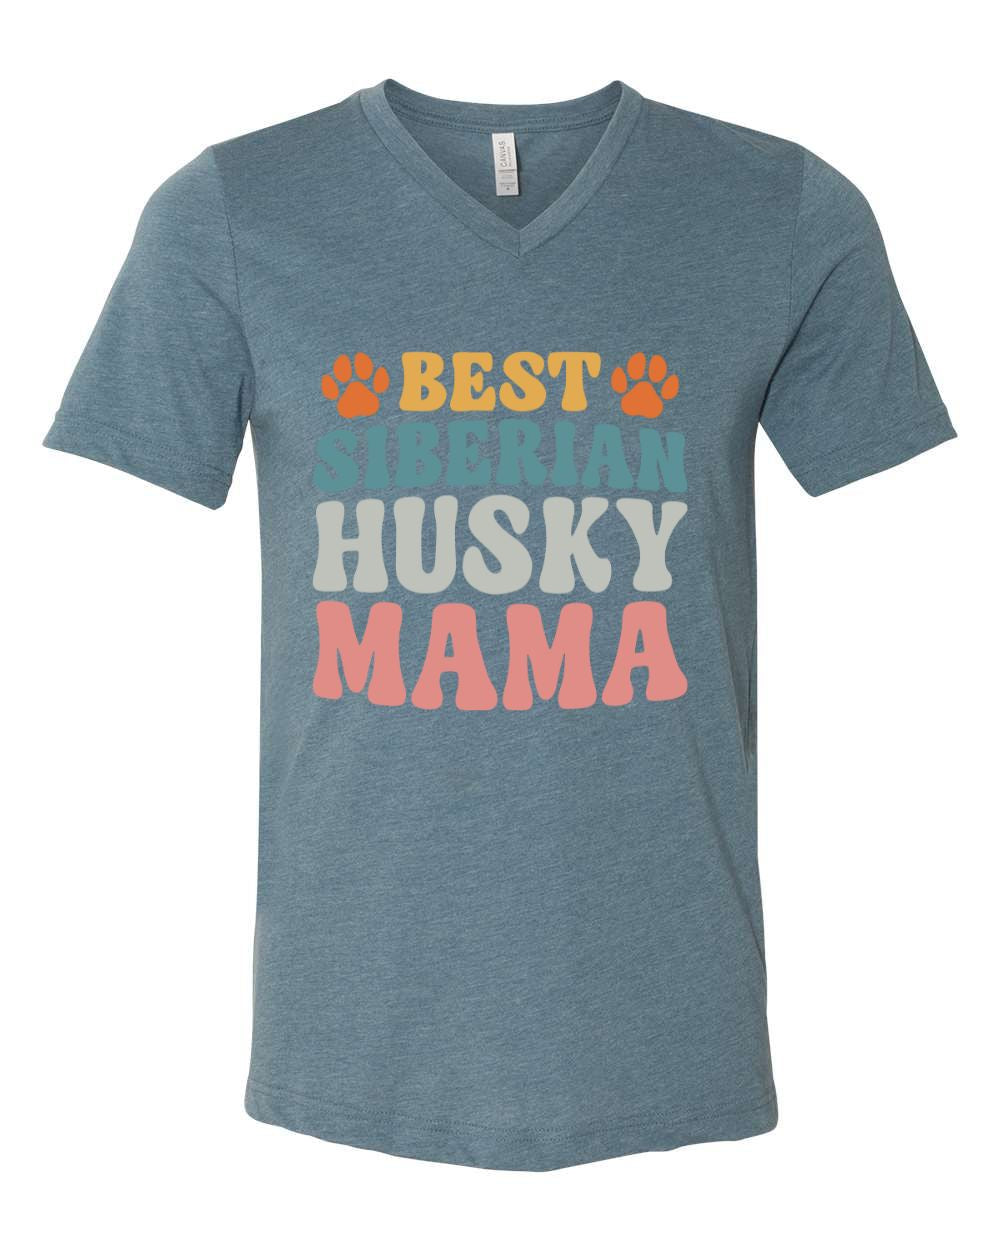 Best Siberian Husky Mama Colored Print V-Neck